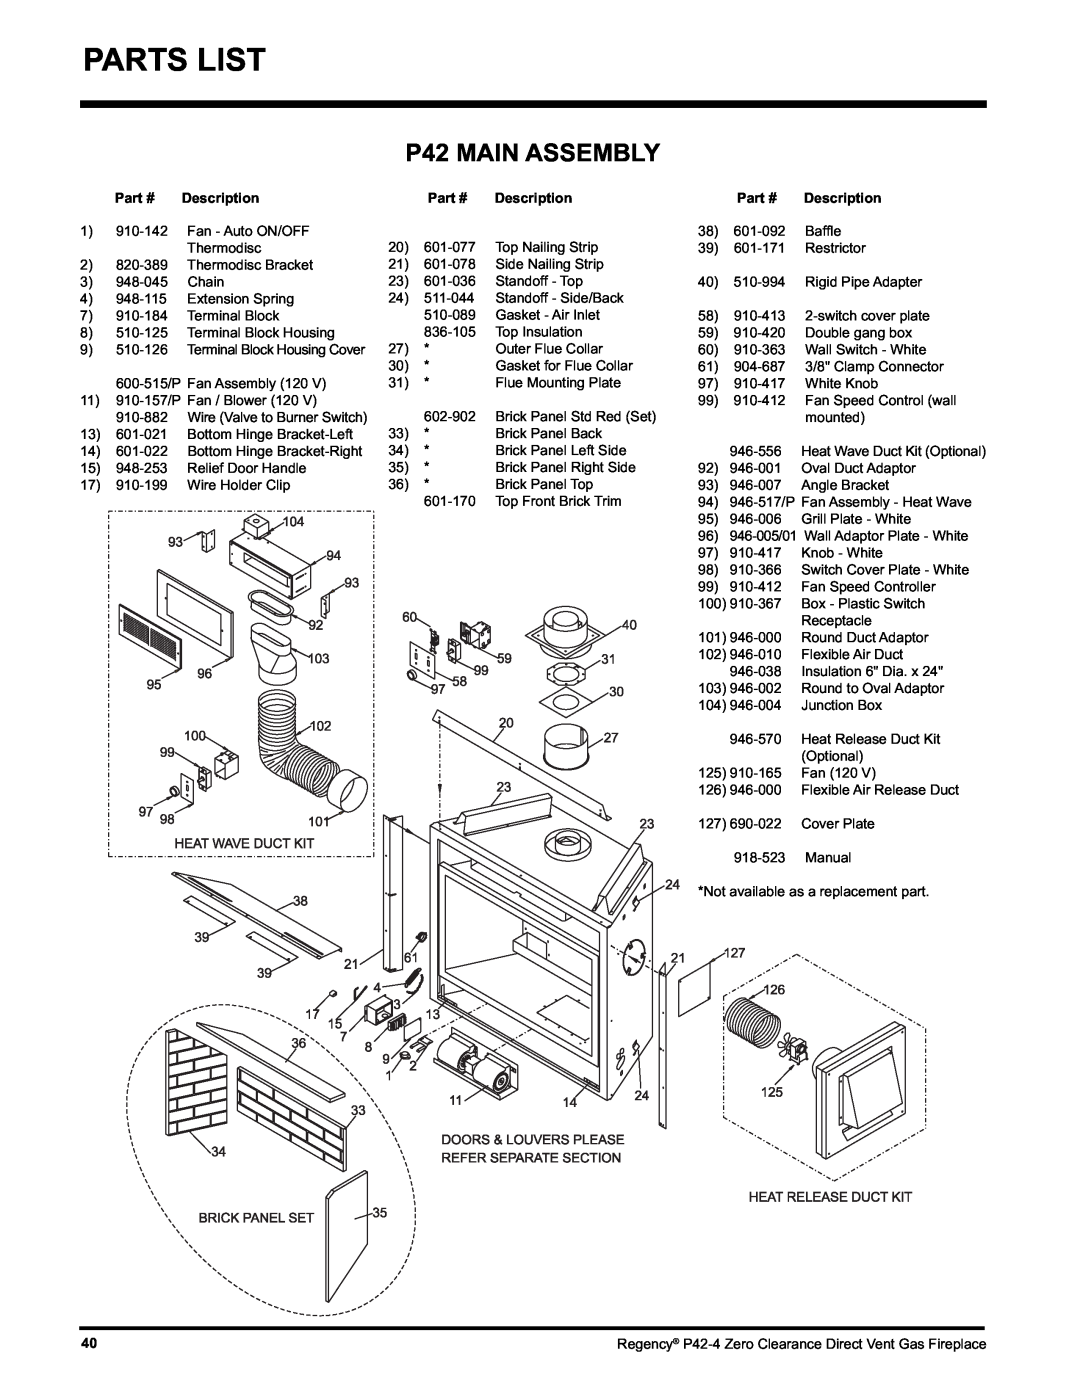 Regency P42-NG4, P42-LP4 installation manual Parts List, P42 MAIN ASSEMBLY, Description 